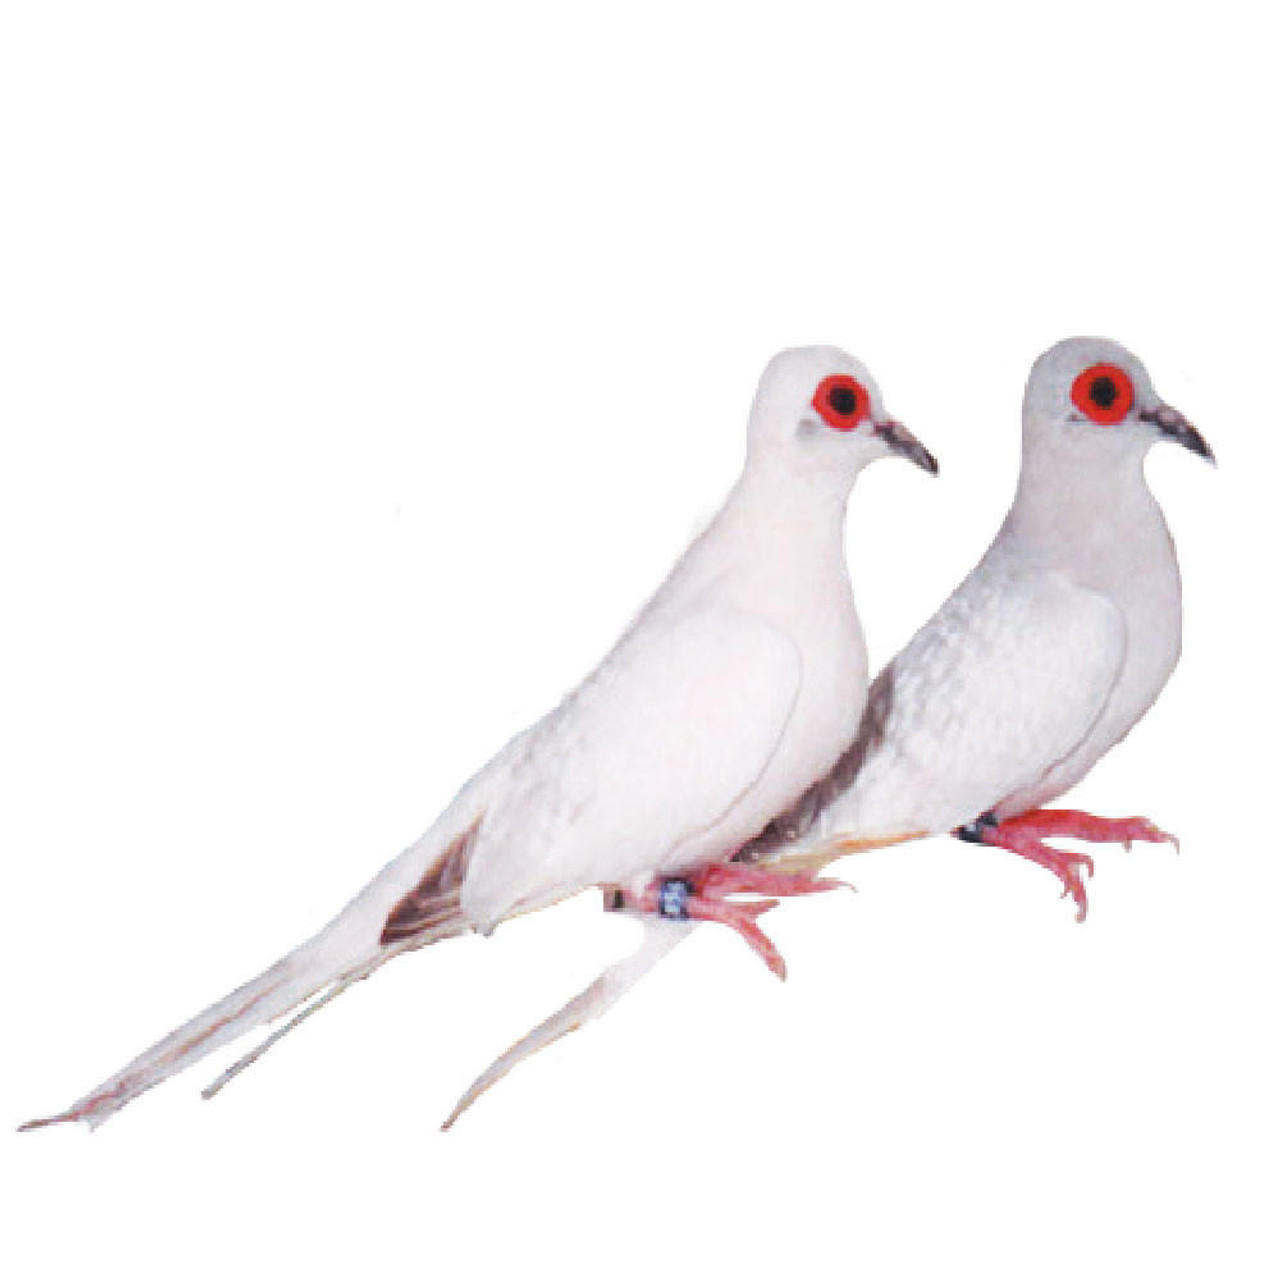 Chubby Diamond Dove Stickers – birdhism